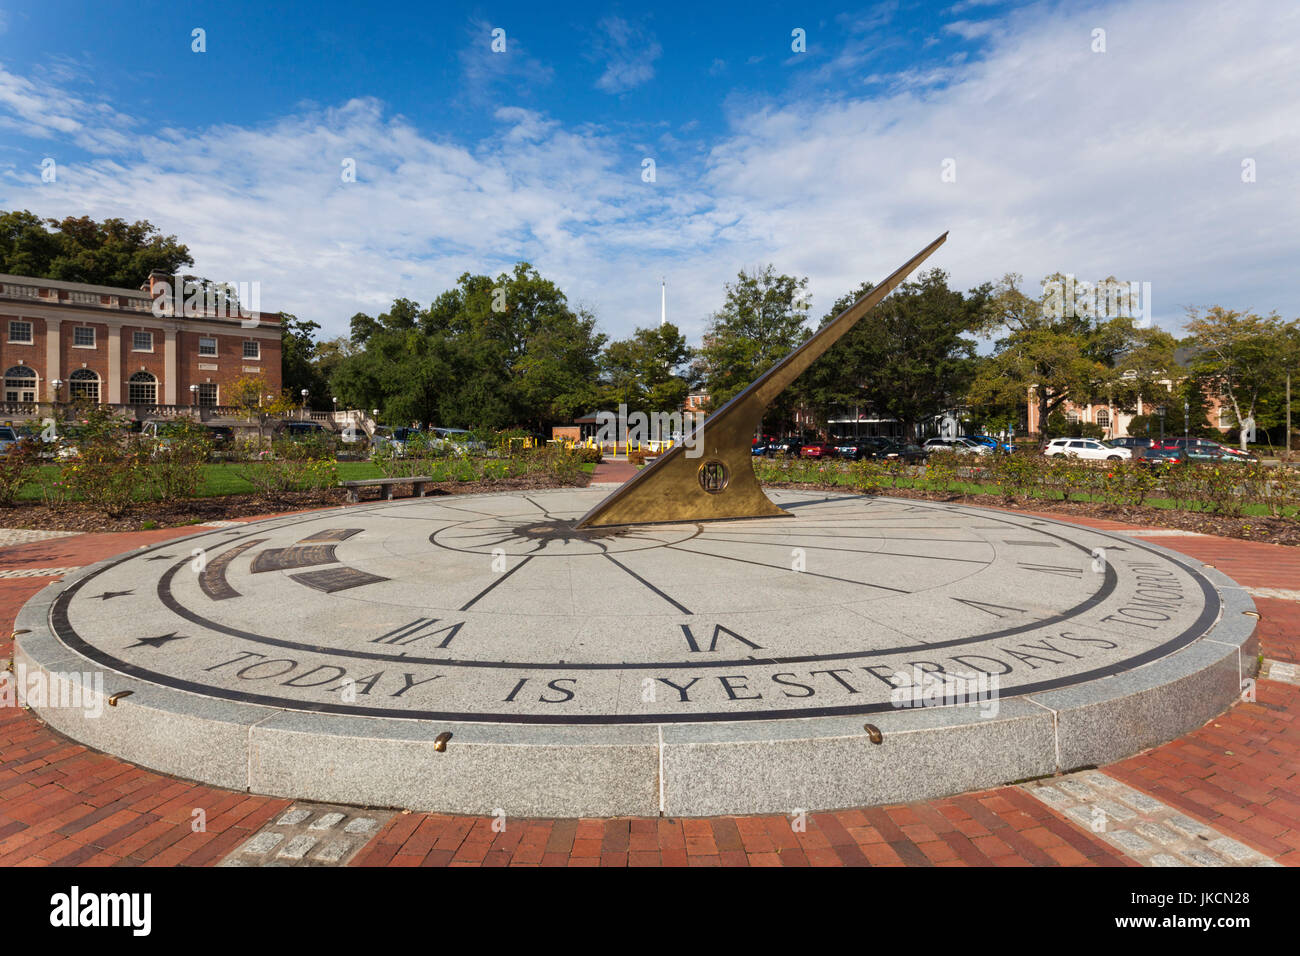 USA, North Carolina, Chapel Hill, University of North Carolina at Chapel Hill, giant sun dial Stock Photo